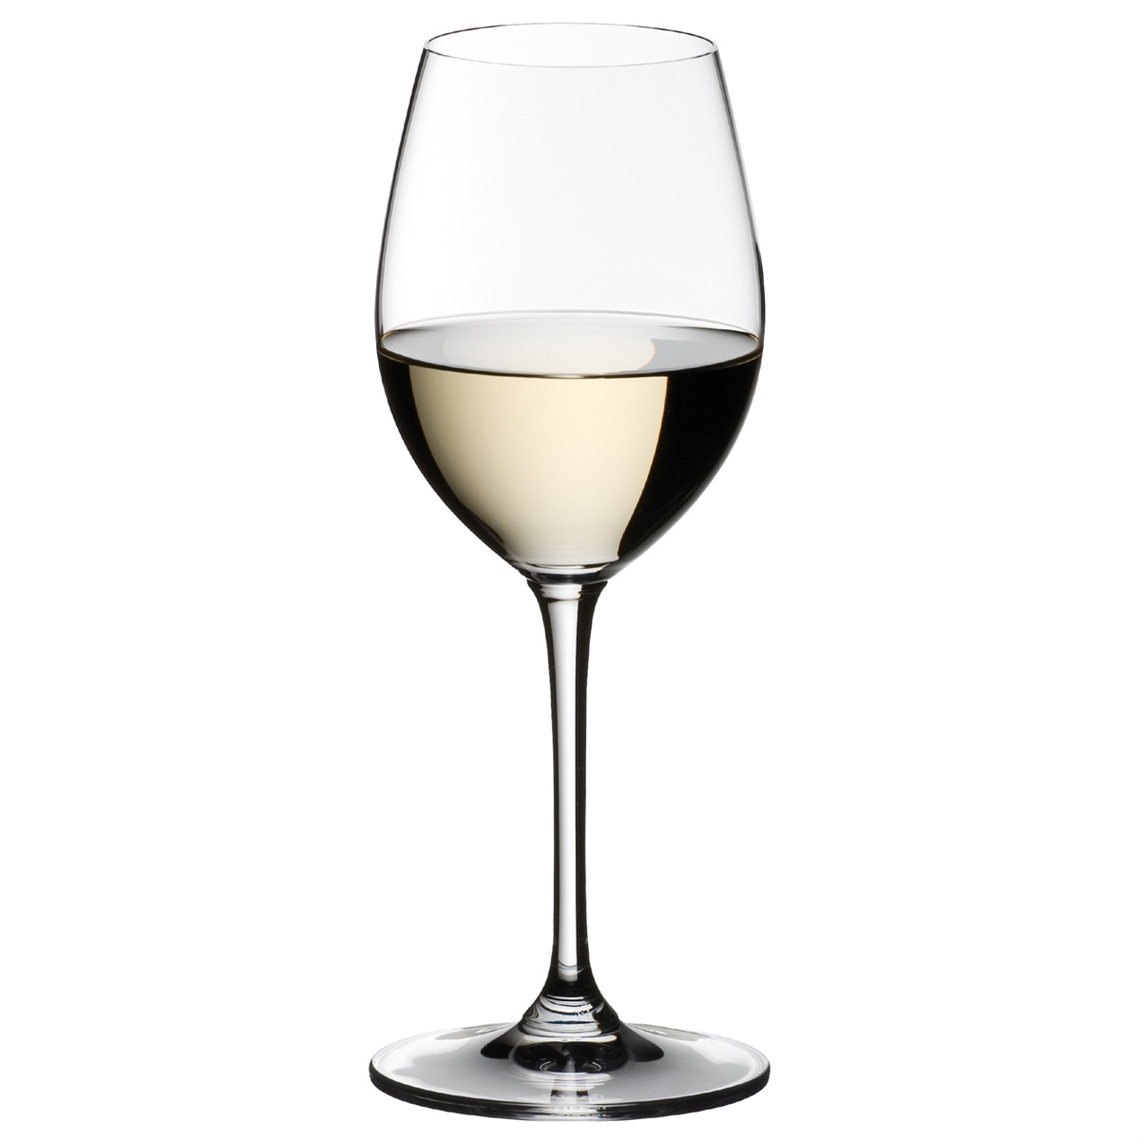 View more restaurant glasses - schott zwiesel from our Dessert Wine Glasses range